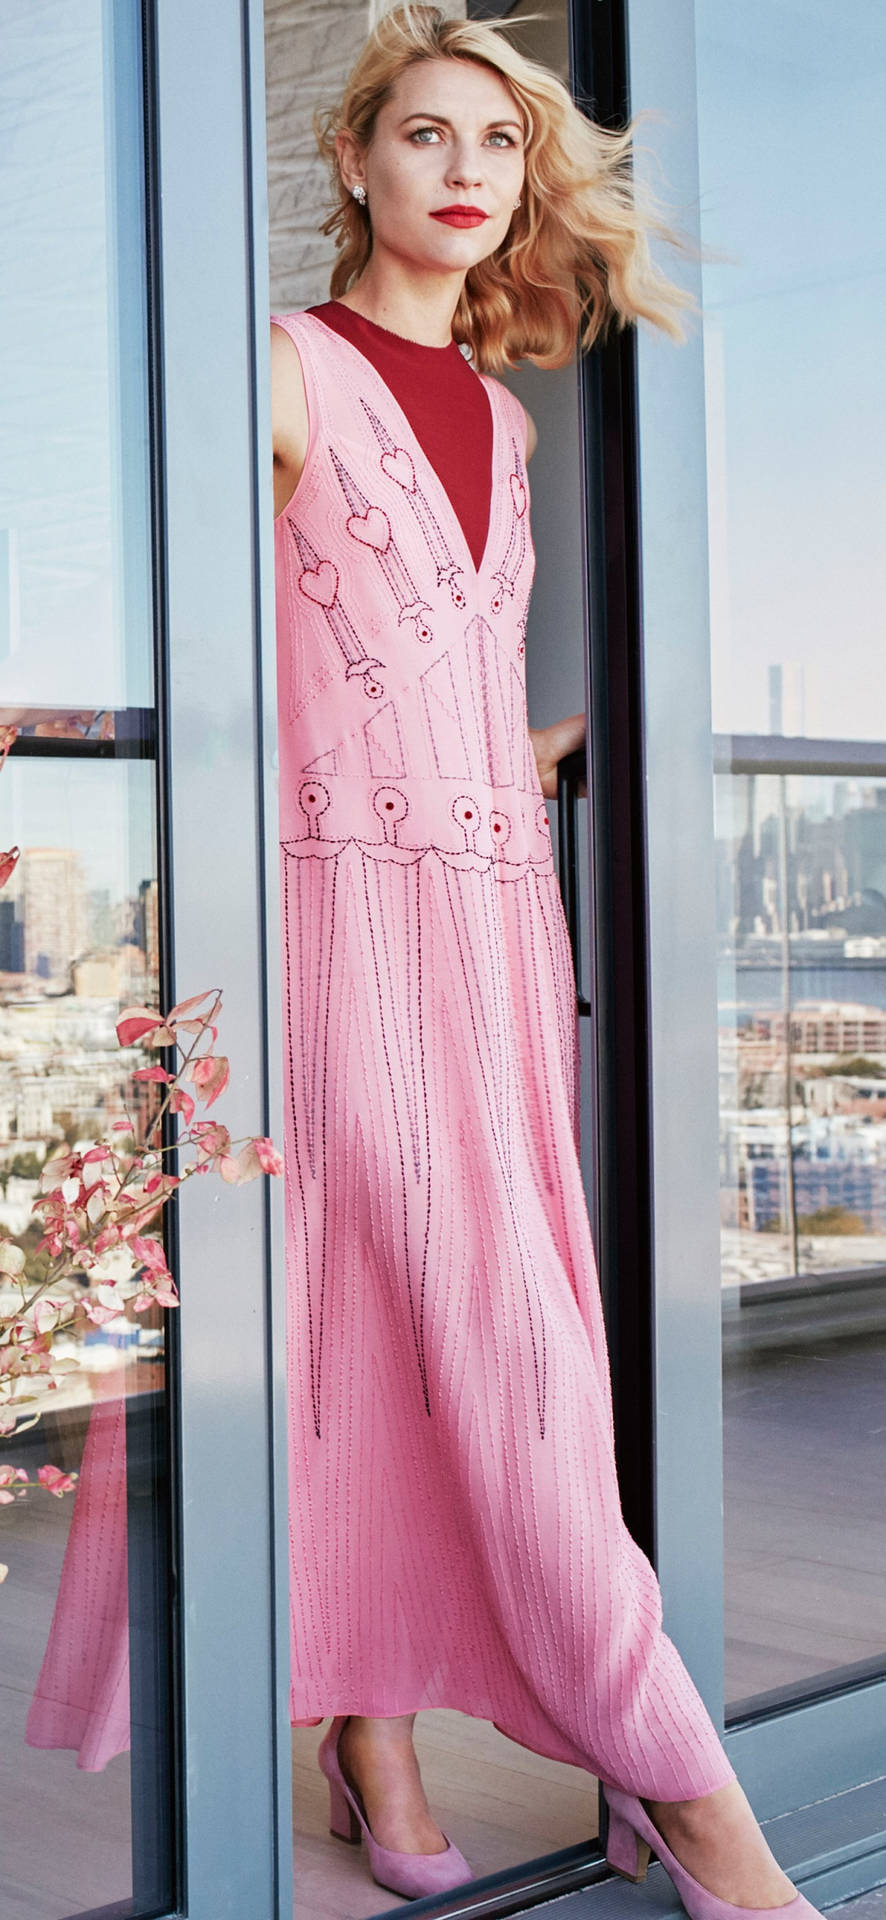 Claire Danes i pink kjole Wallpaper